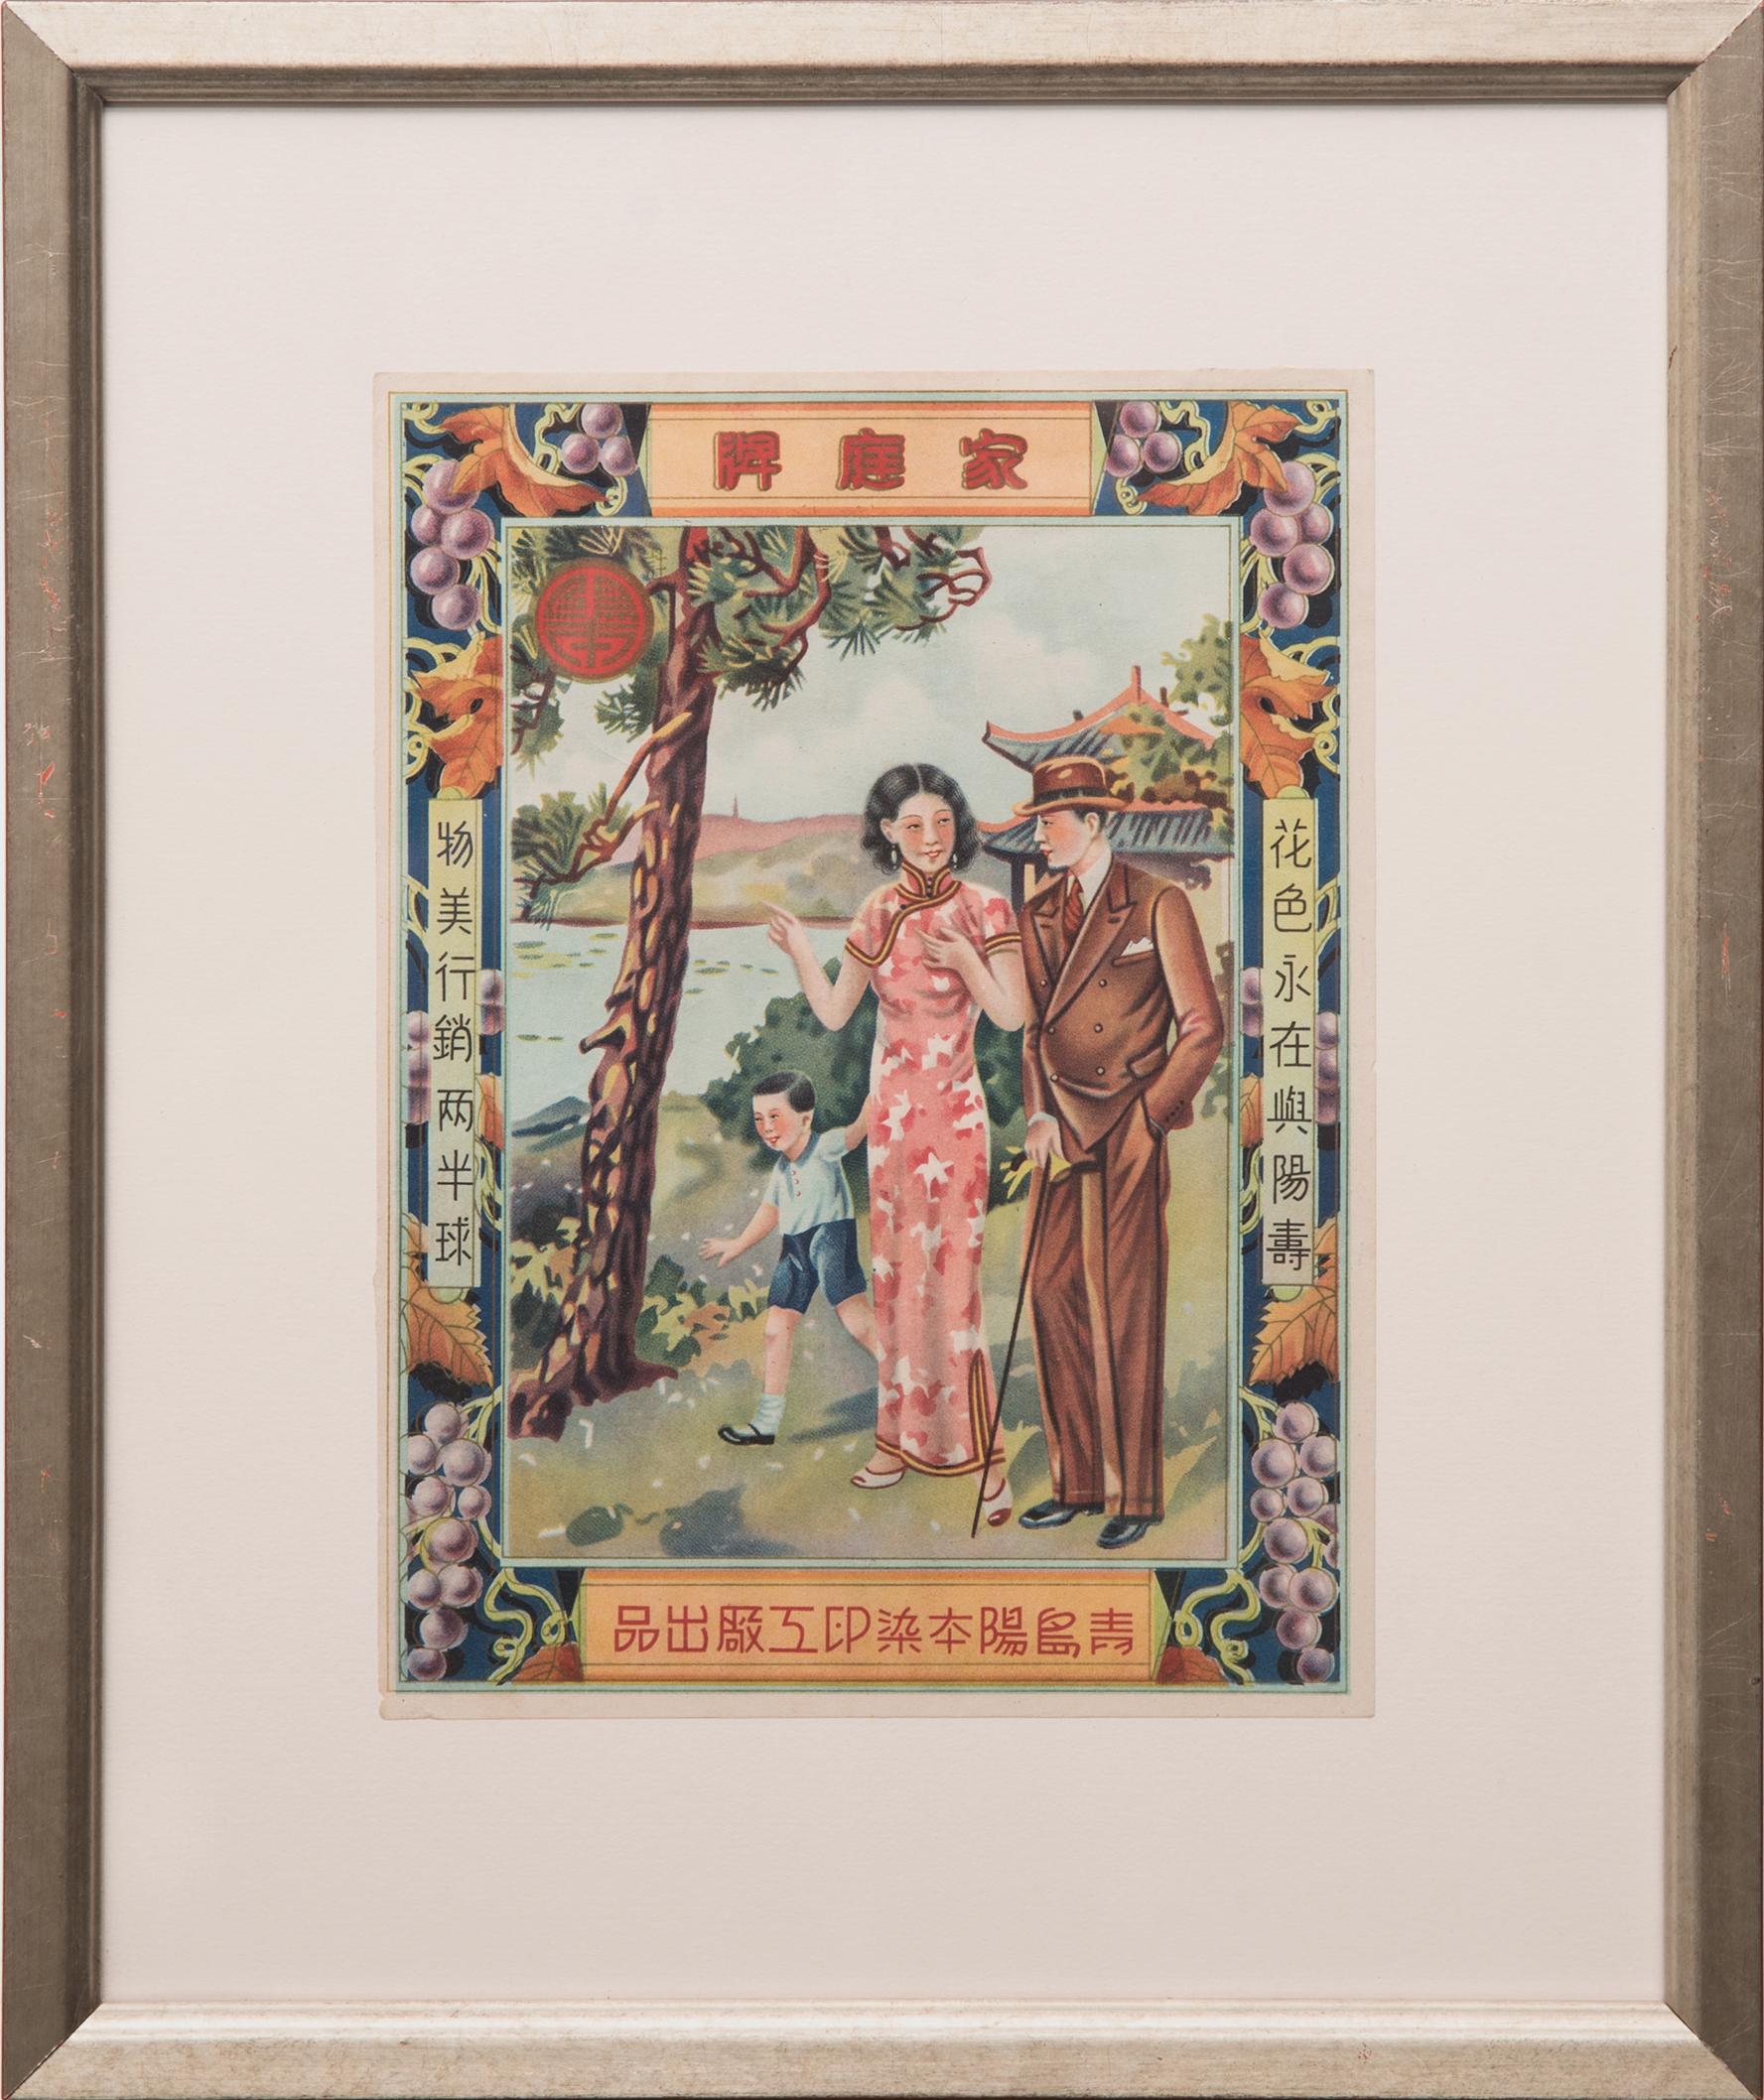 Unknown Portrait Print - Vintage Chinese Republic Period Advertisement